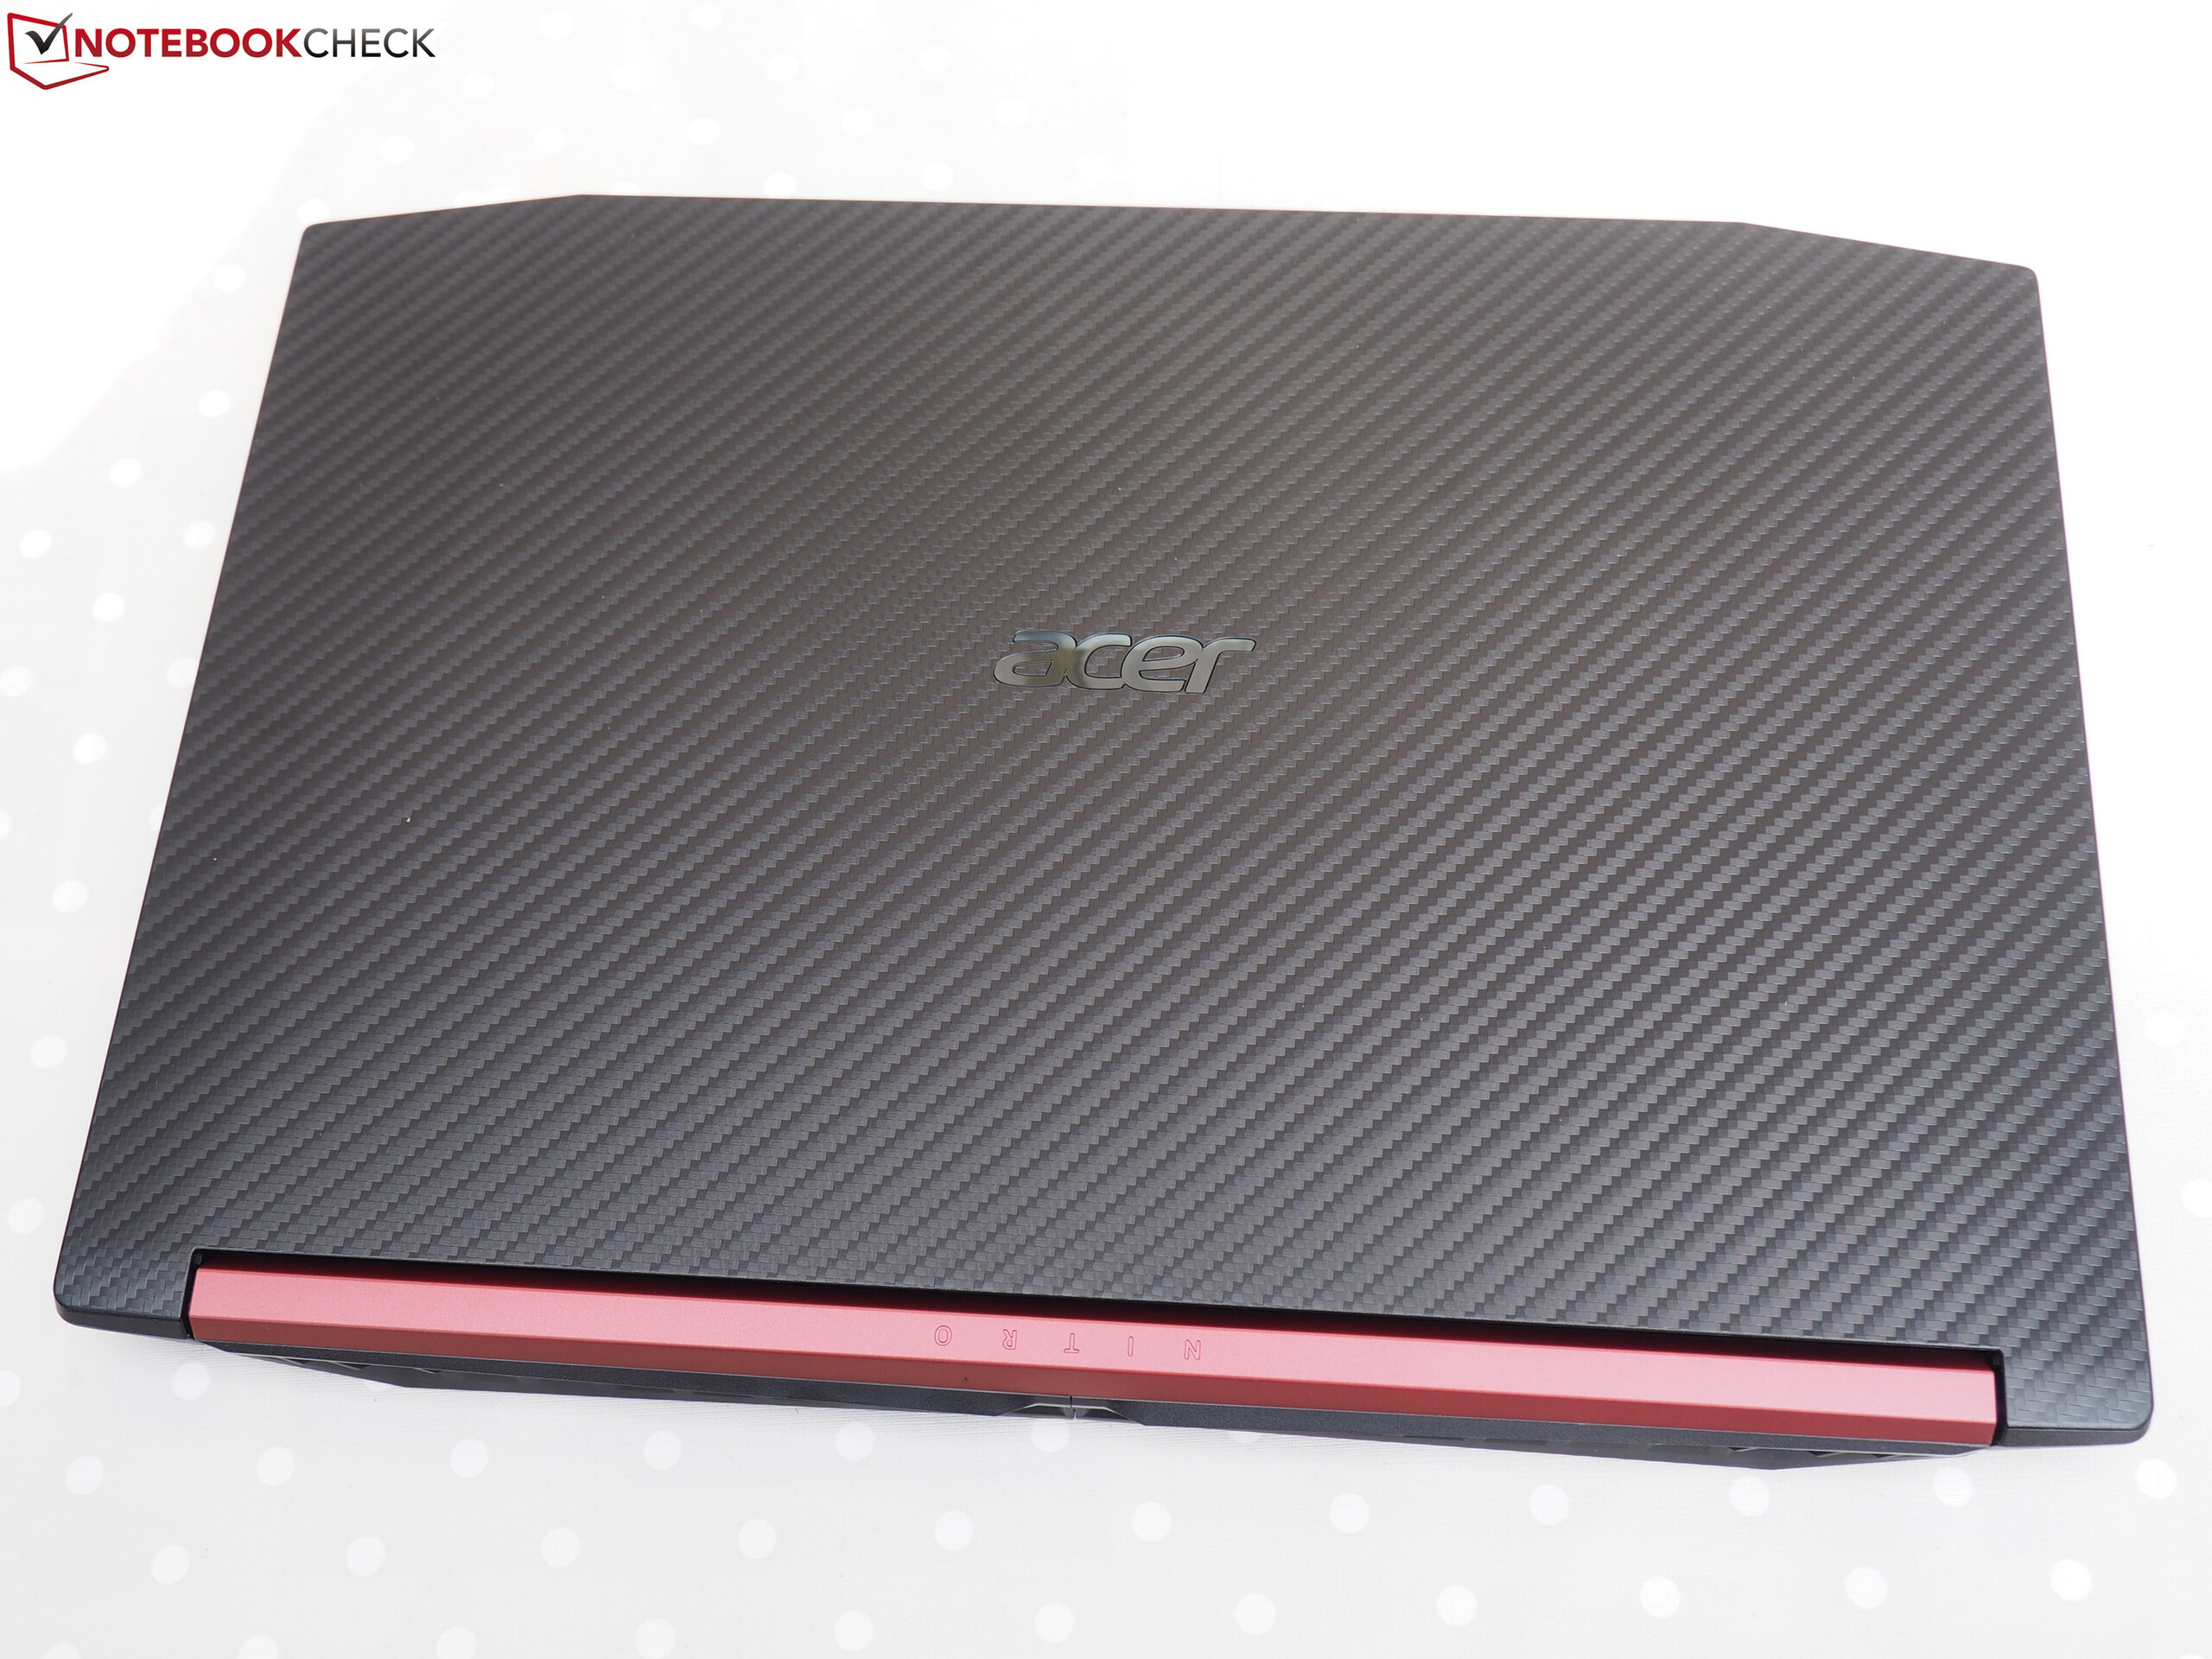 Acer Nitro 5 (i7-8750H, GTX 1050 Ti, FHD) Laptop Review 